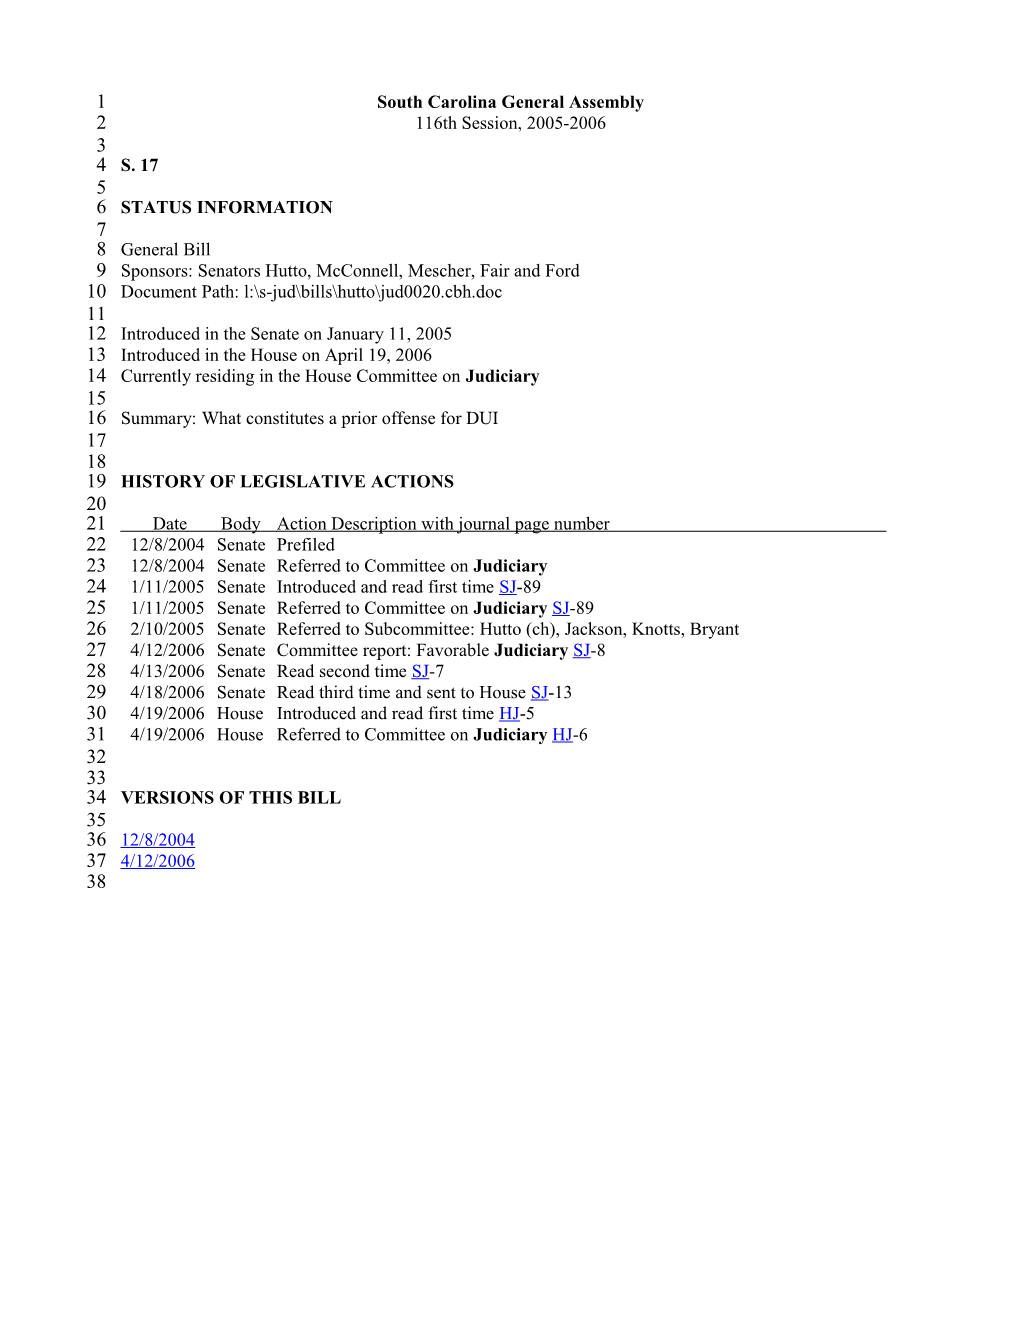 2005-2006 Bill 17: What Constitutes a Prior Offense for DUI - South Carolina Legislature Online